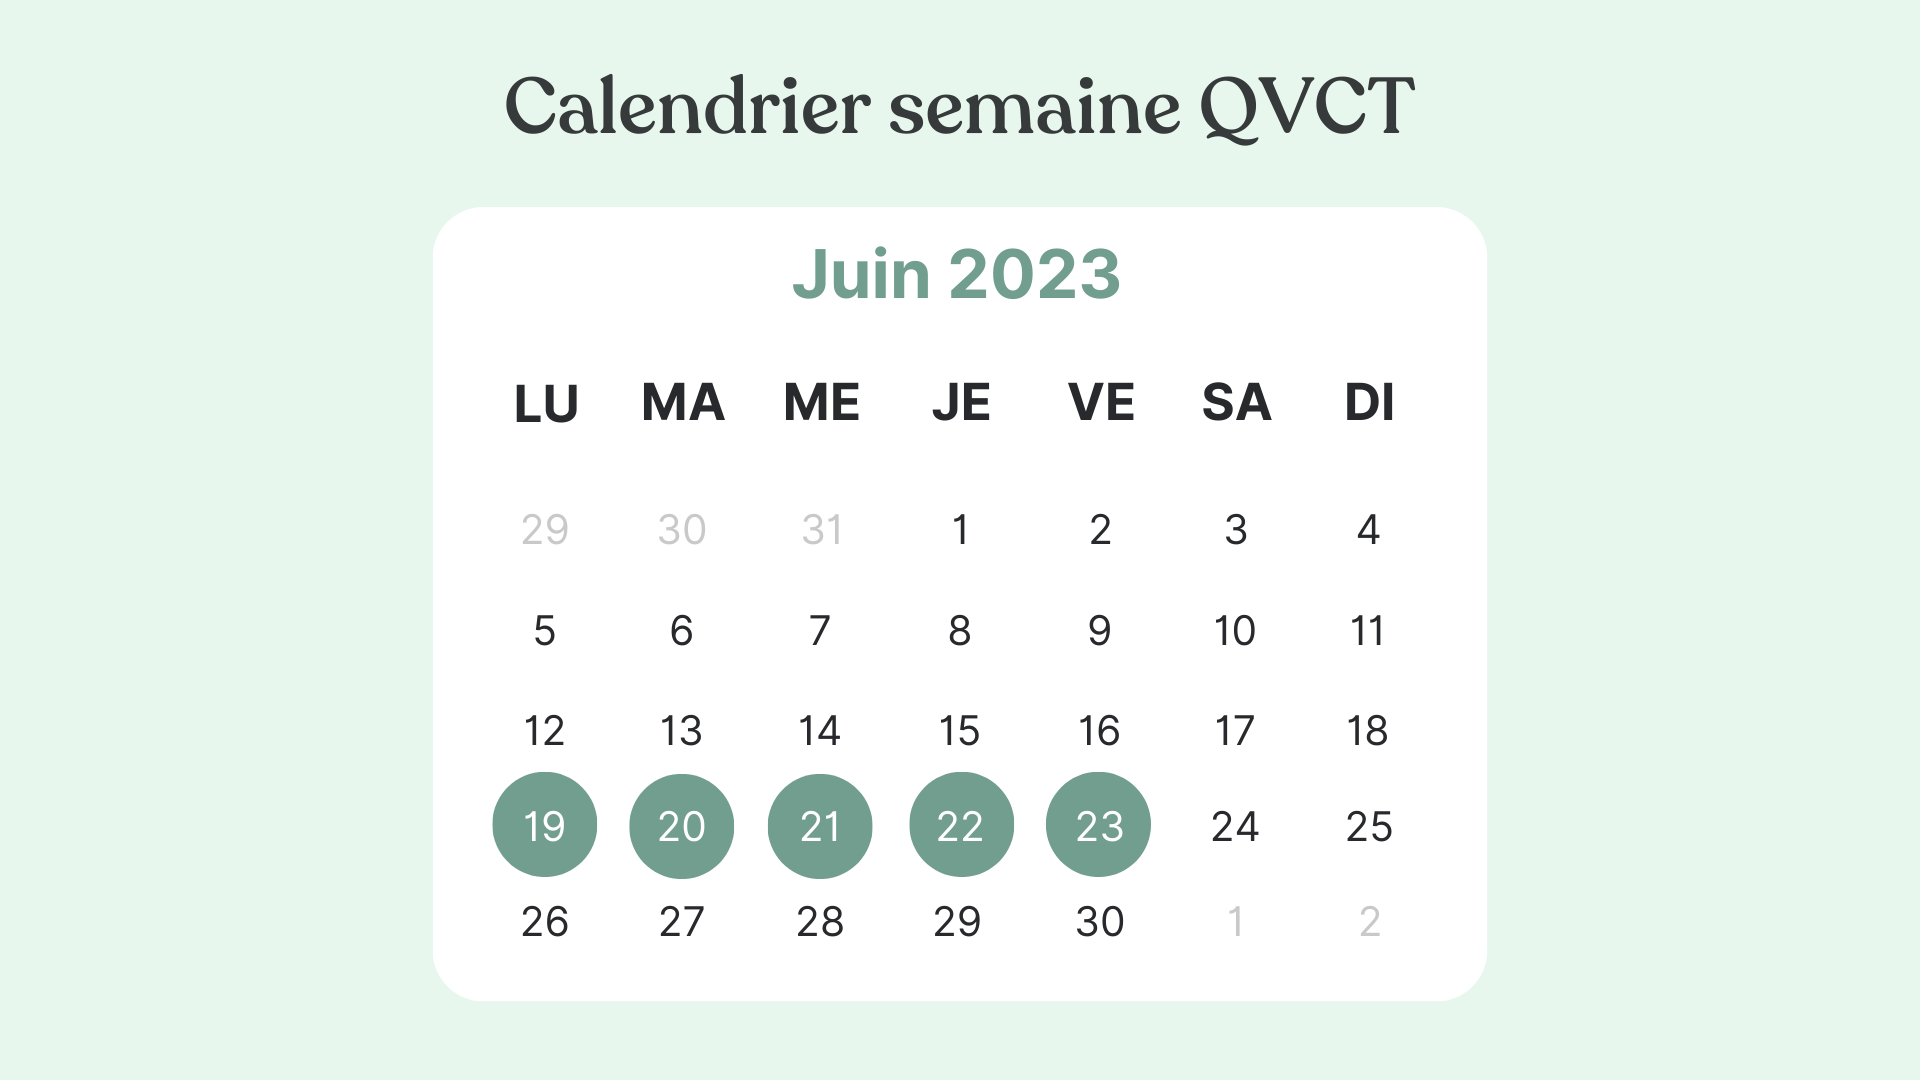 Quand a lieu la semaine de la QVCT 2023 ?